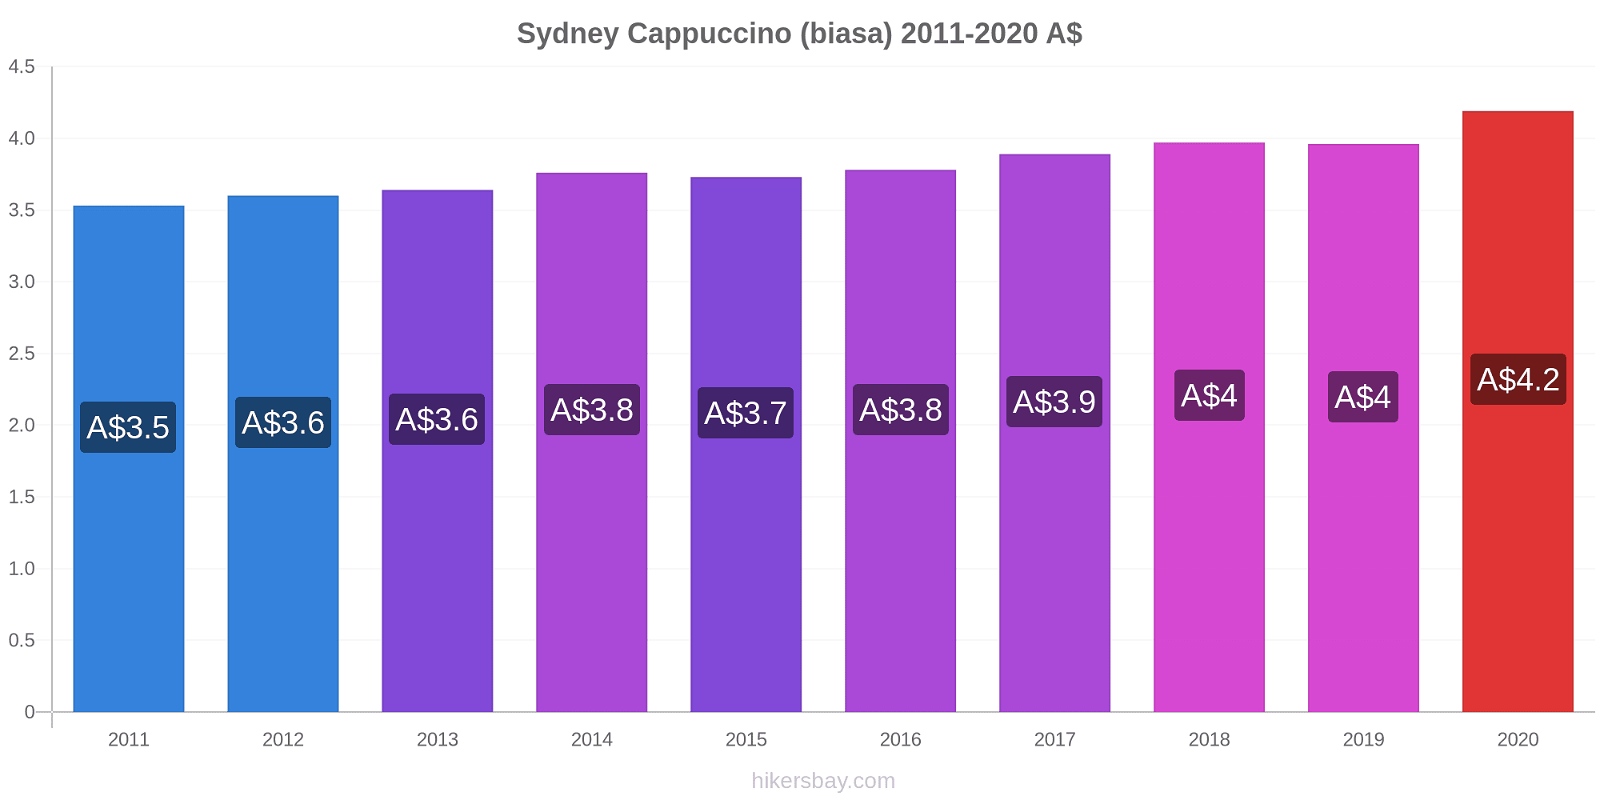 Sydney perubahan harga Cappuccino (biasa) hikersbay.com